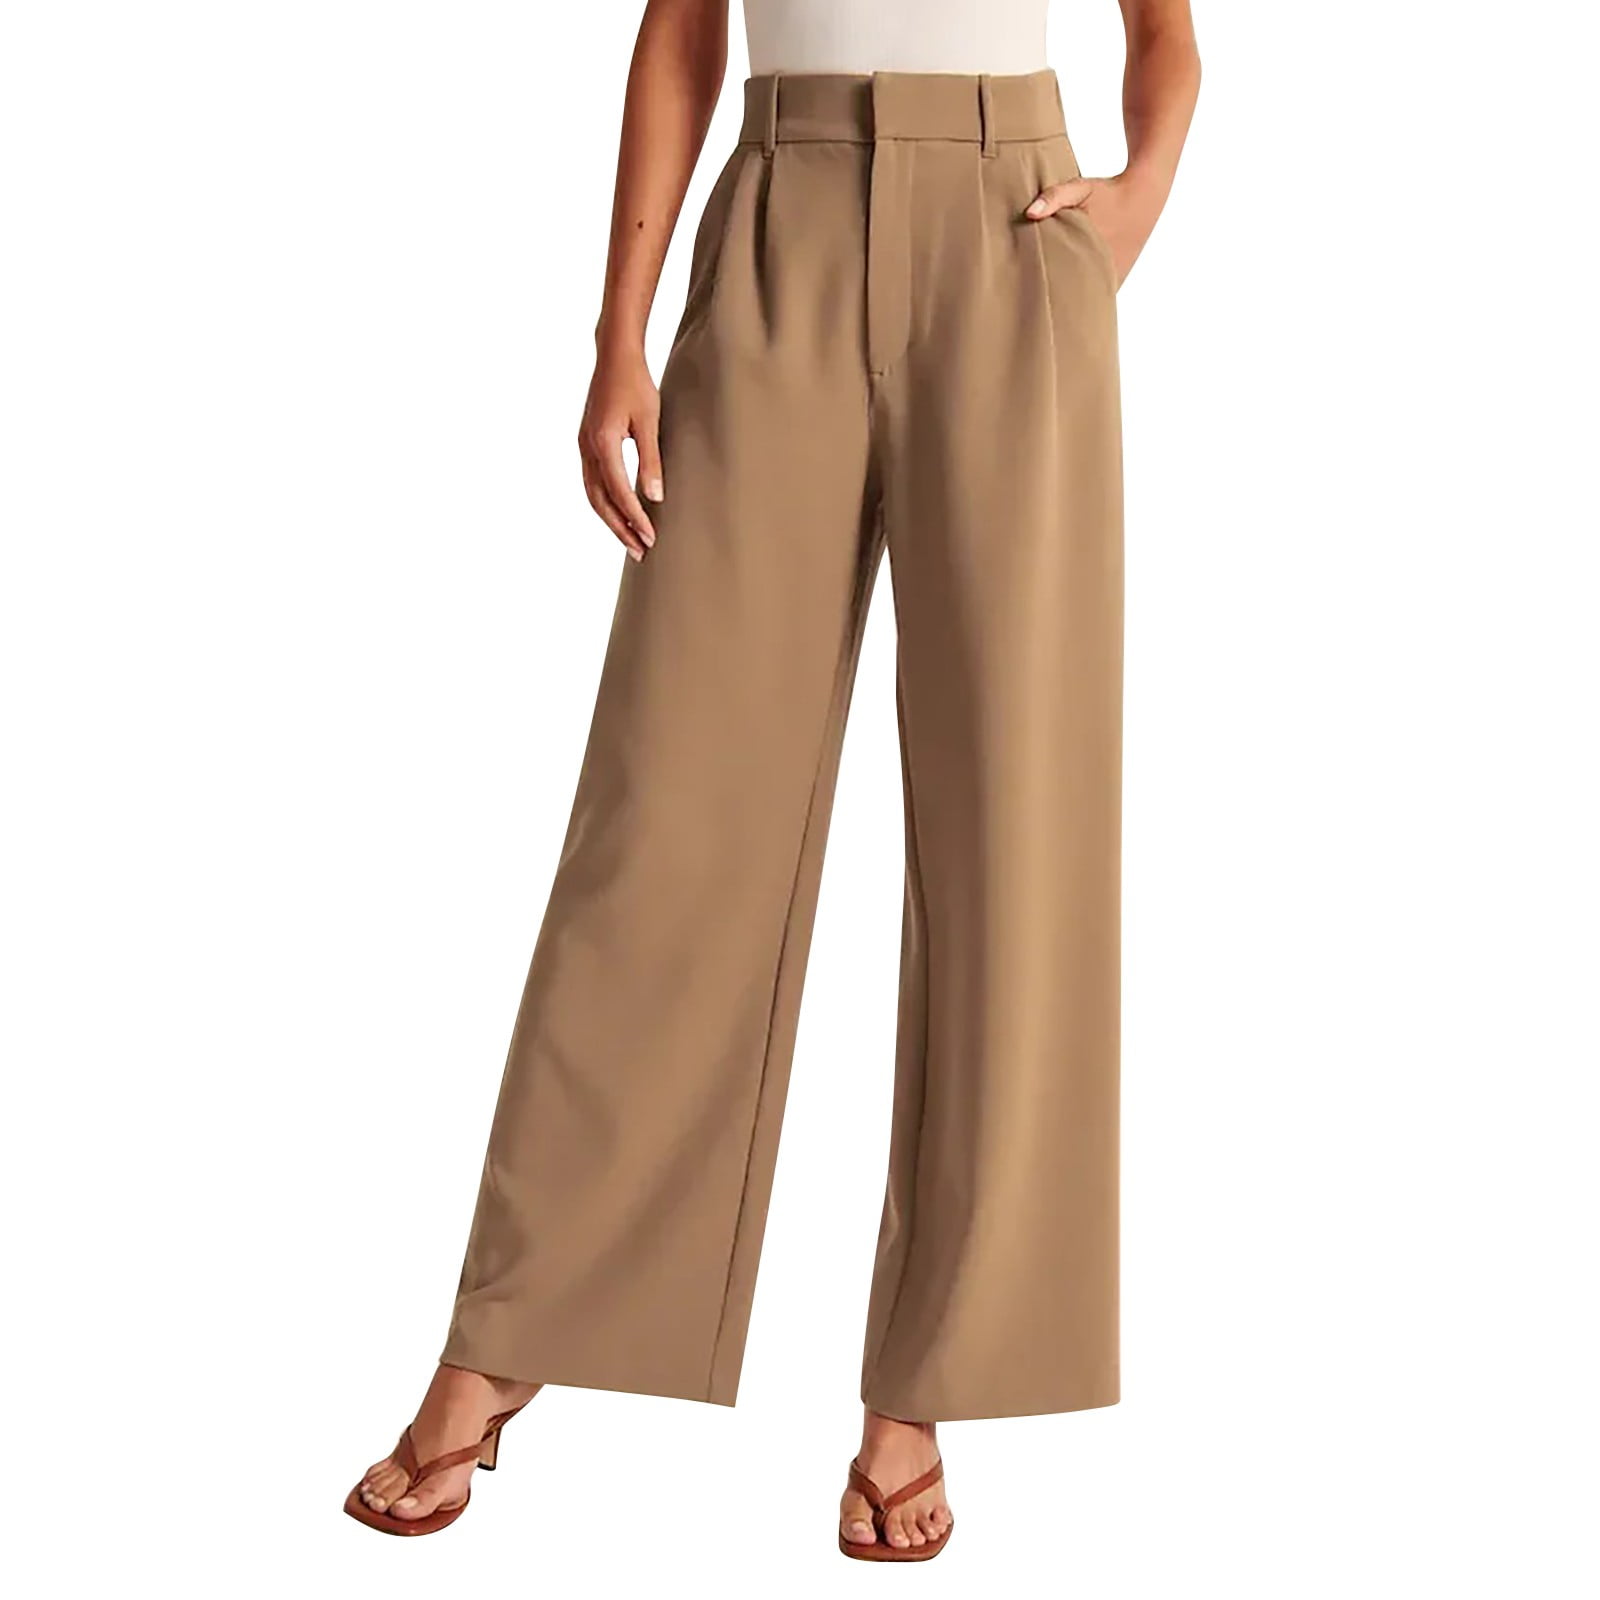 Pants for Women Women's Casual Wide Leg Dress Pants High Waist Tailored  Button Down Trousers With Pockets Women's Pants Khaki XXXL